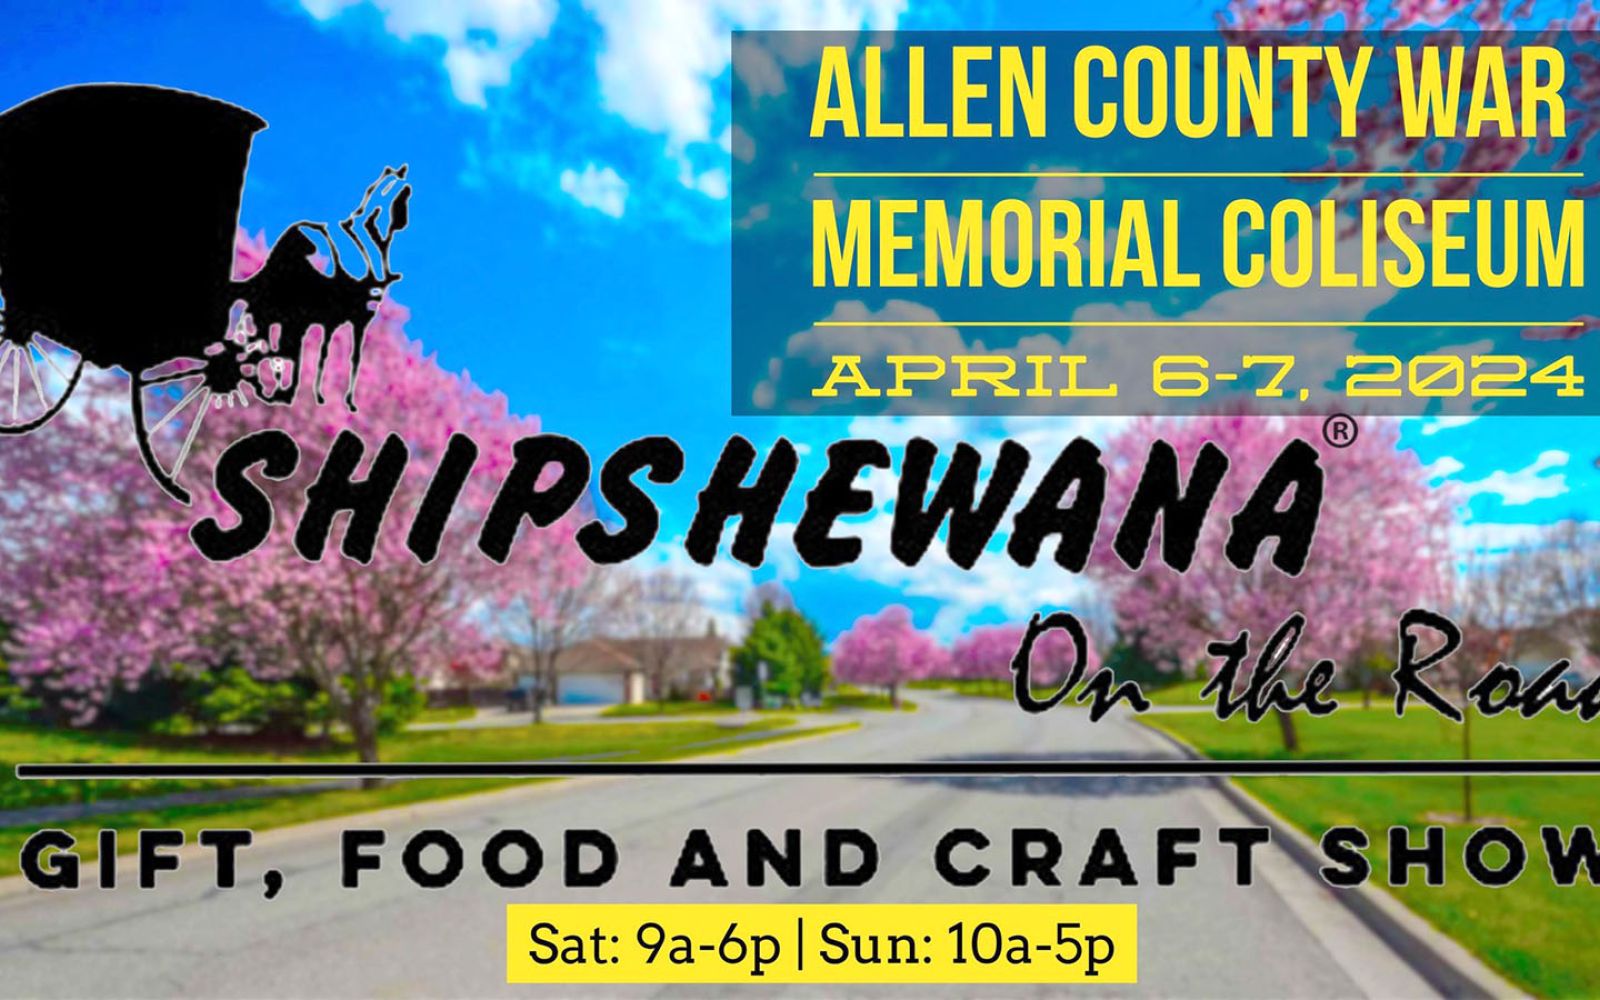 Shipshewana on the Road returns to Memorial Coliseum, April 6-7.